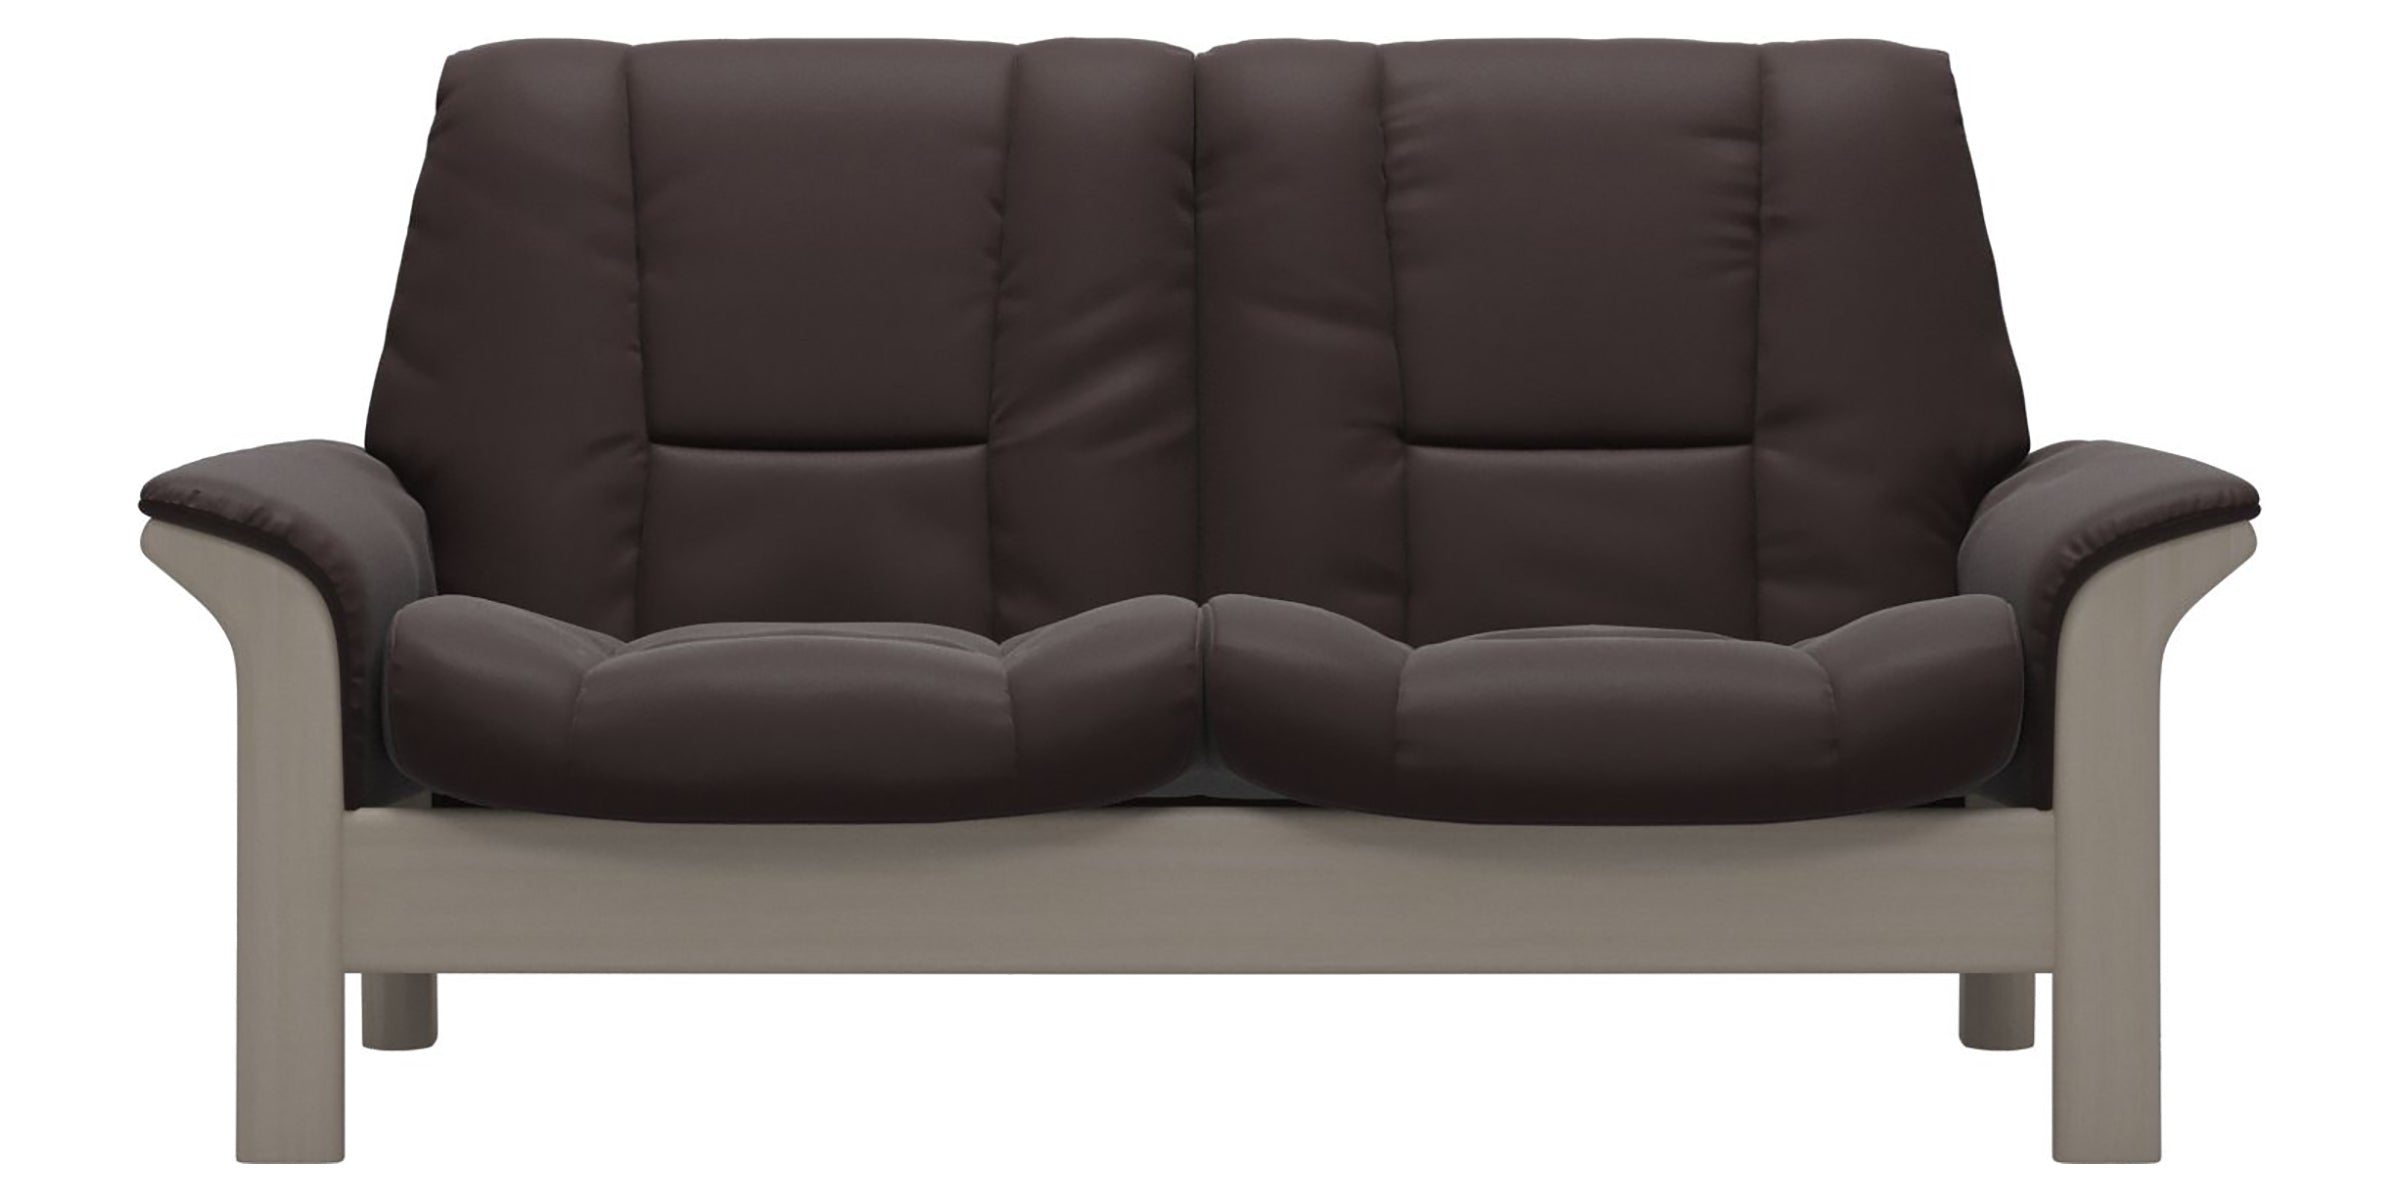 Paloma Leather Chocolate and Whitewash Base | Stressless Buckingham 2-Seater Low Back Sofa | Valley Ridge Furniture